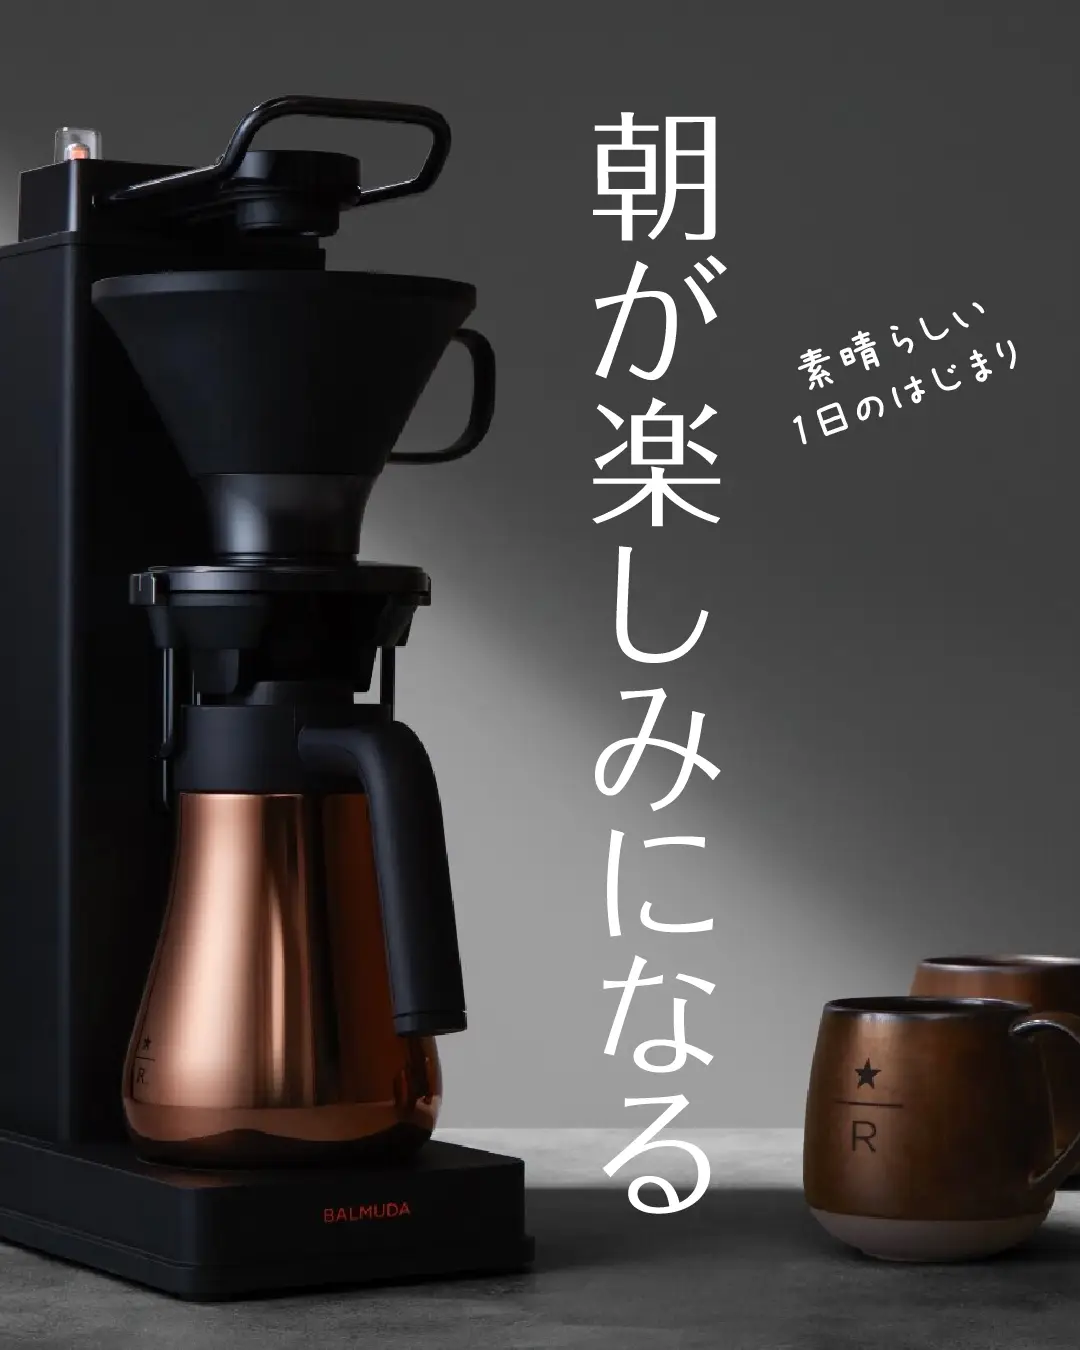 Collaboration appliance with Starbucks! Balmuda coffee maker